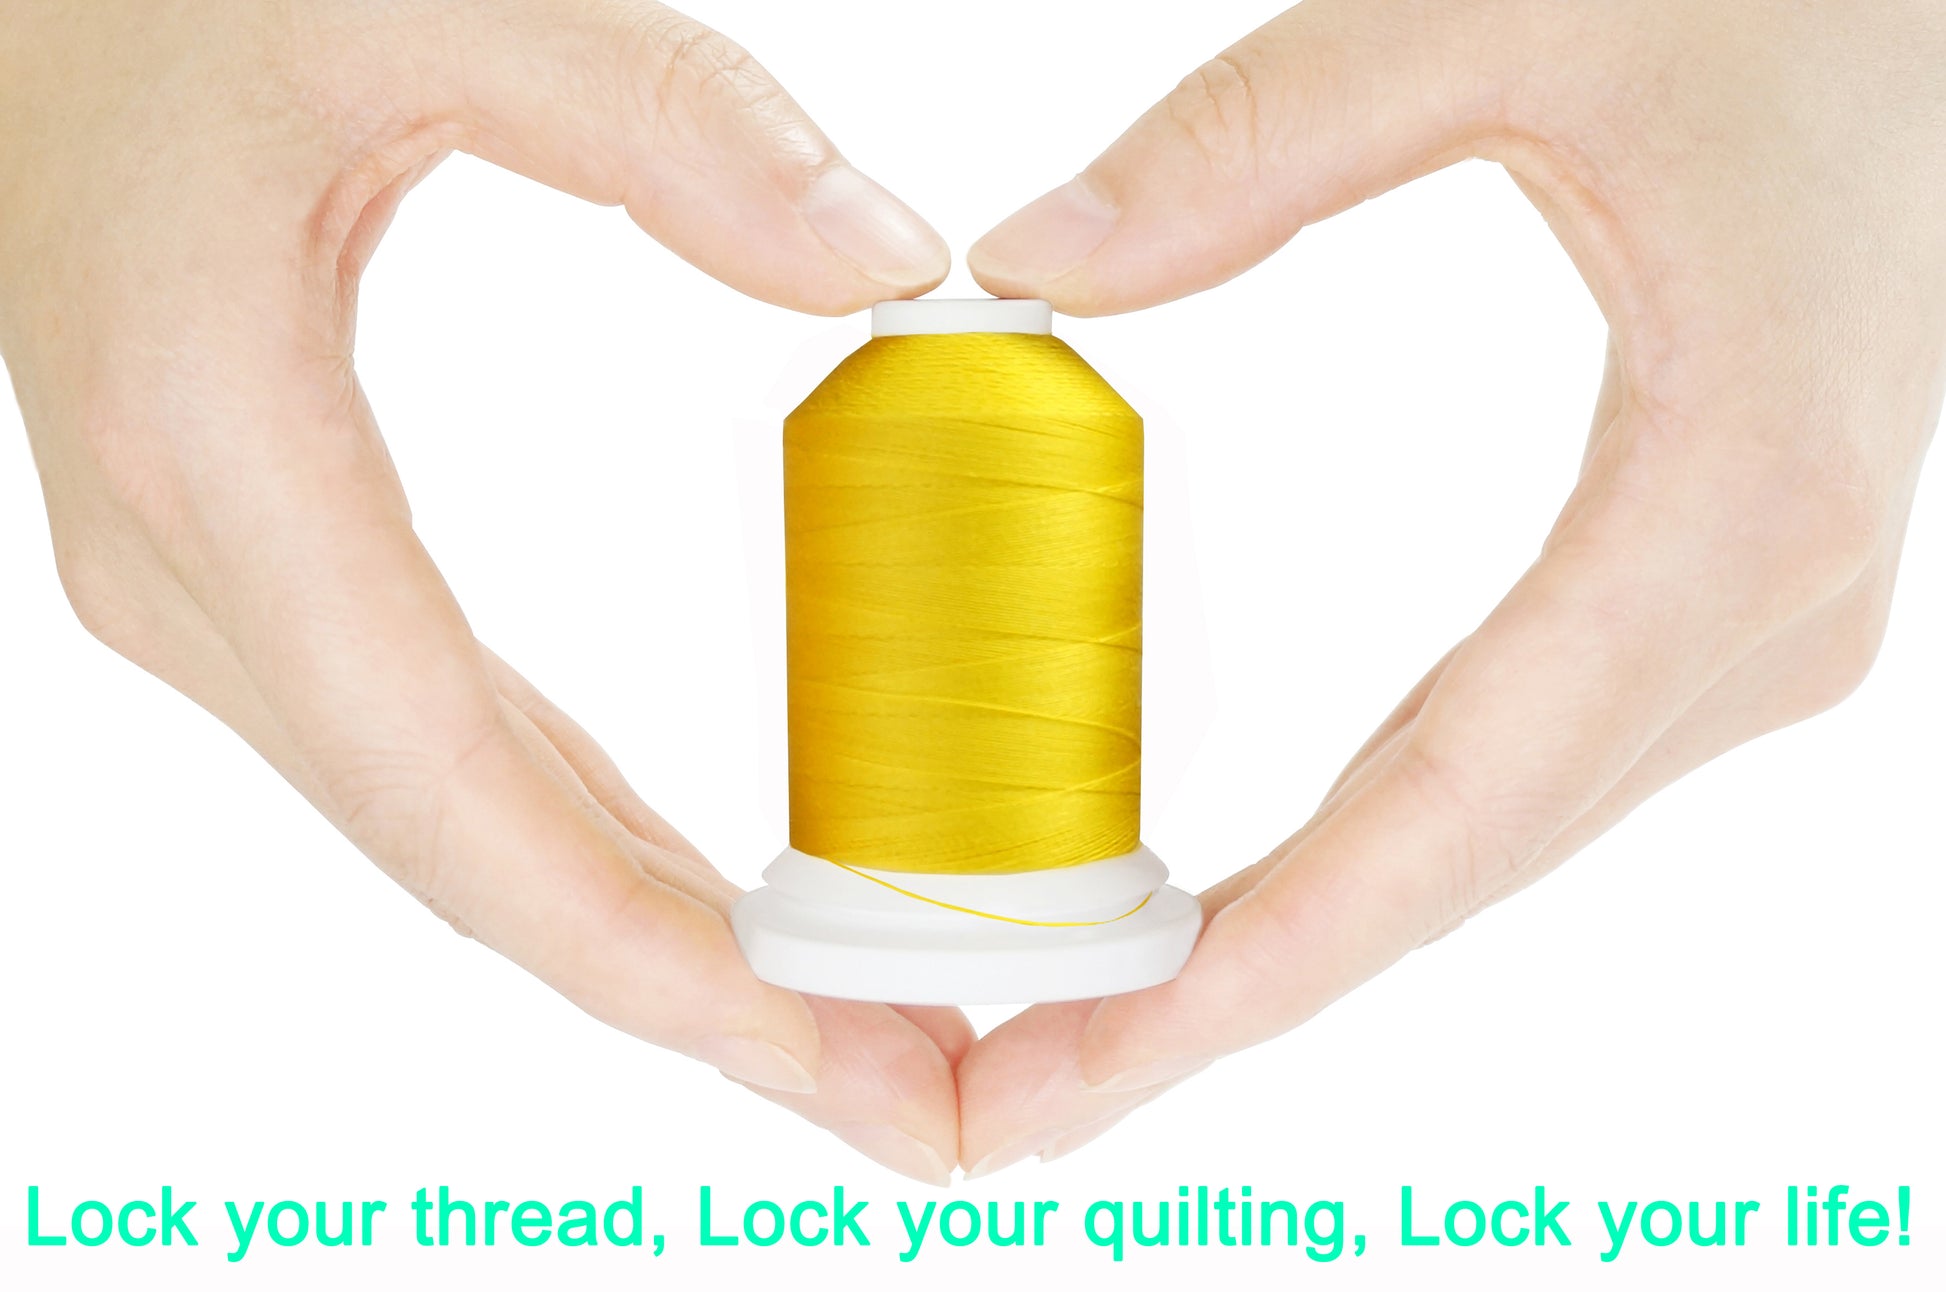 Buy 3 Spool a Threading Thread, a Cotton Eyebrow Threading Thread, Antibacterial Cotton Threads